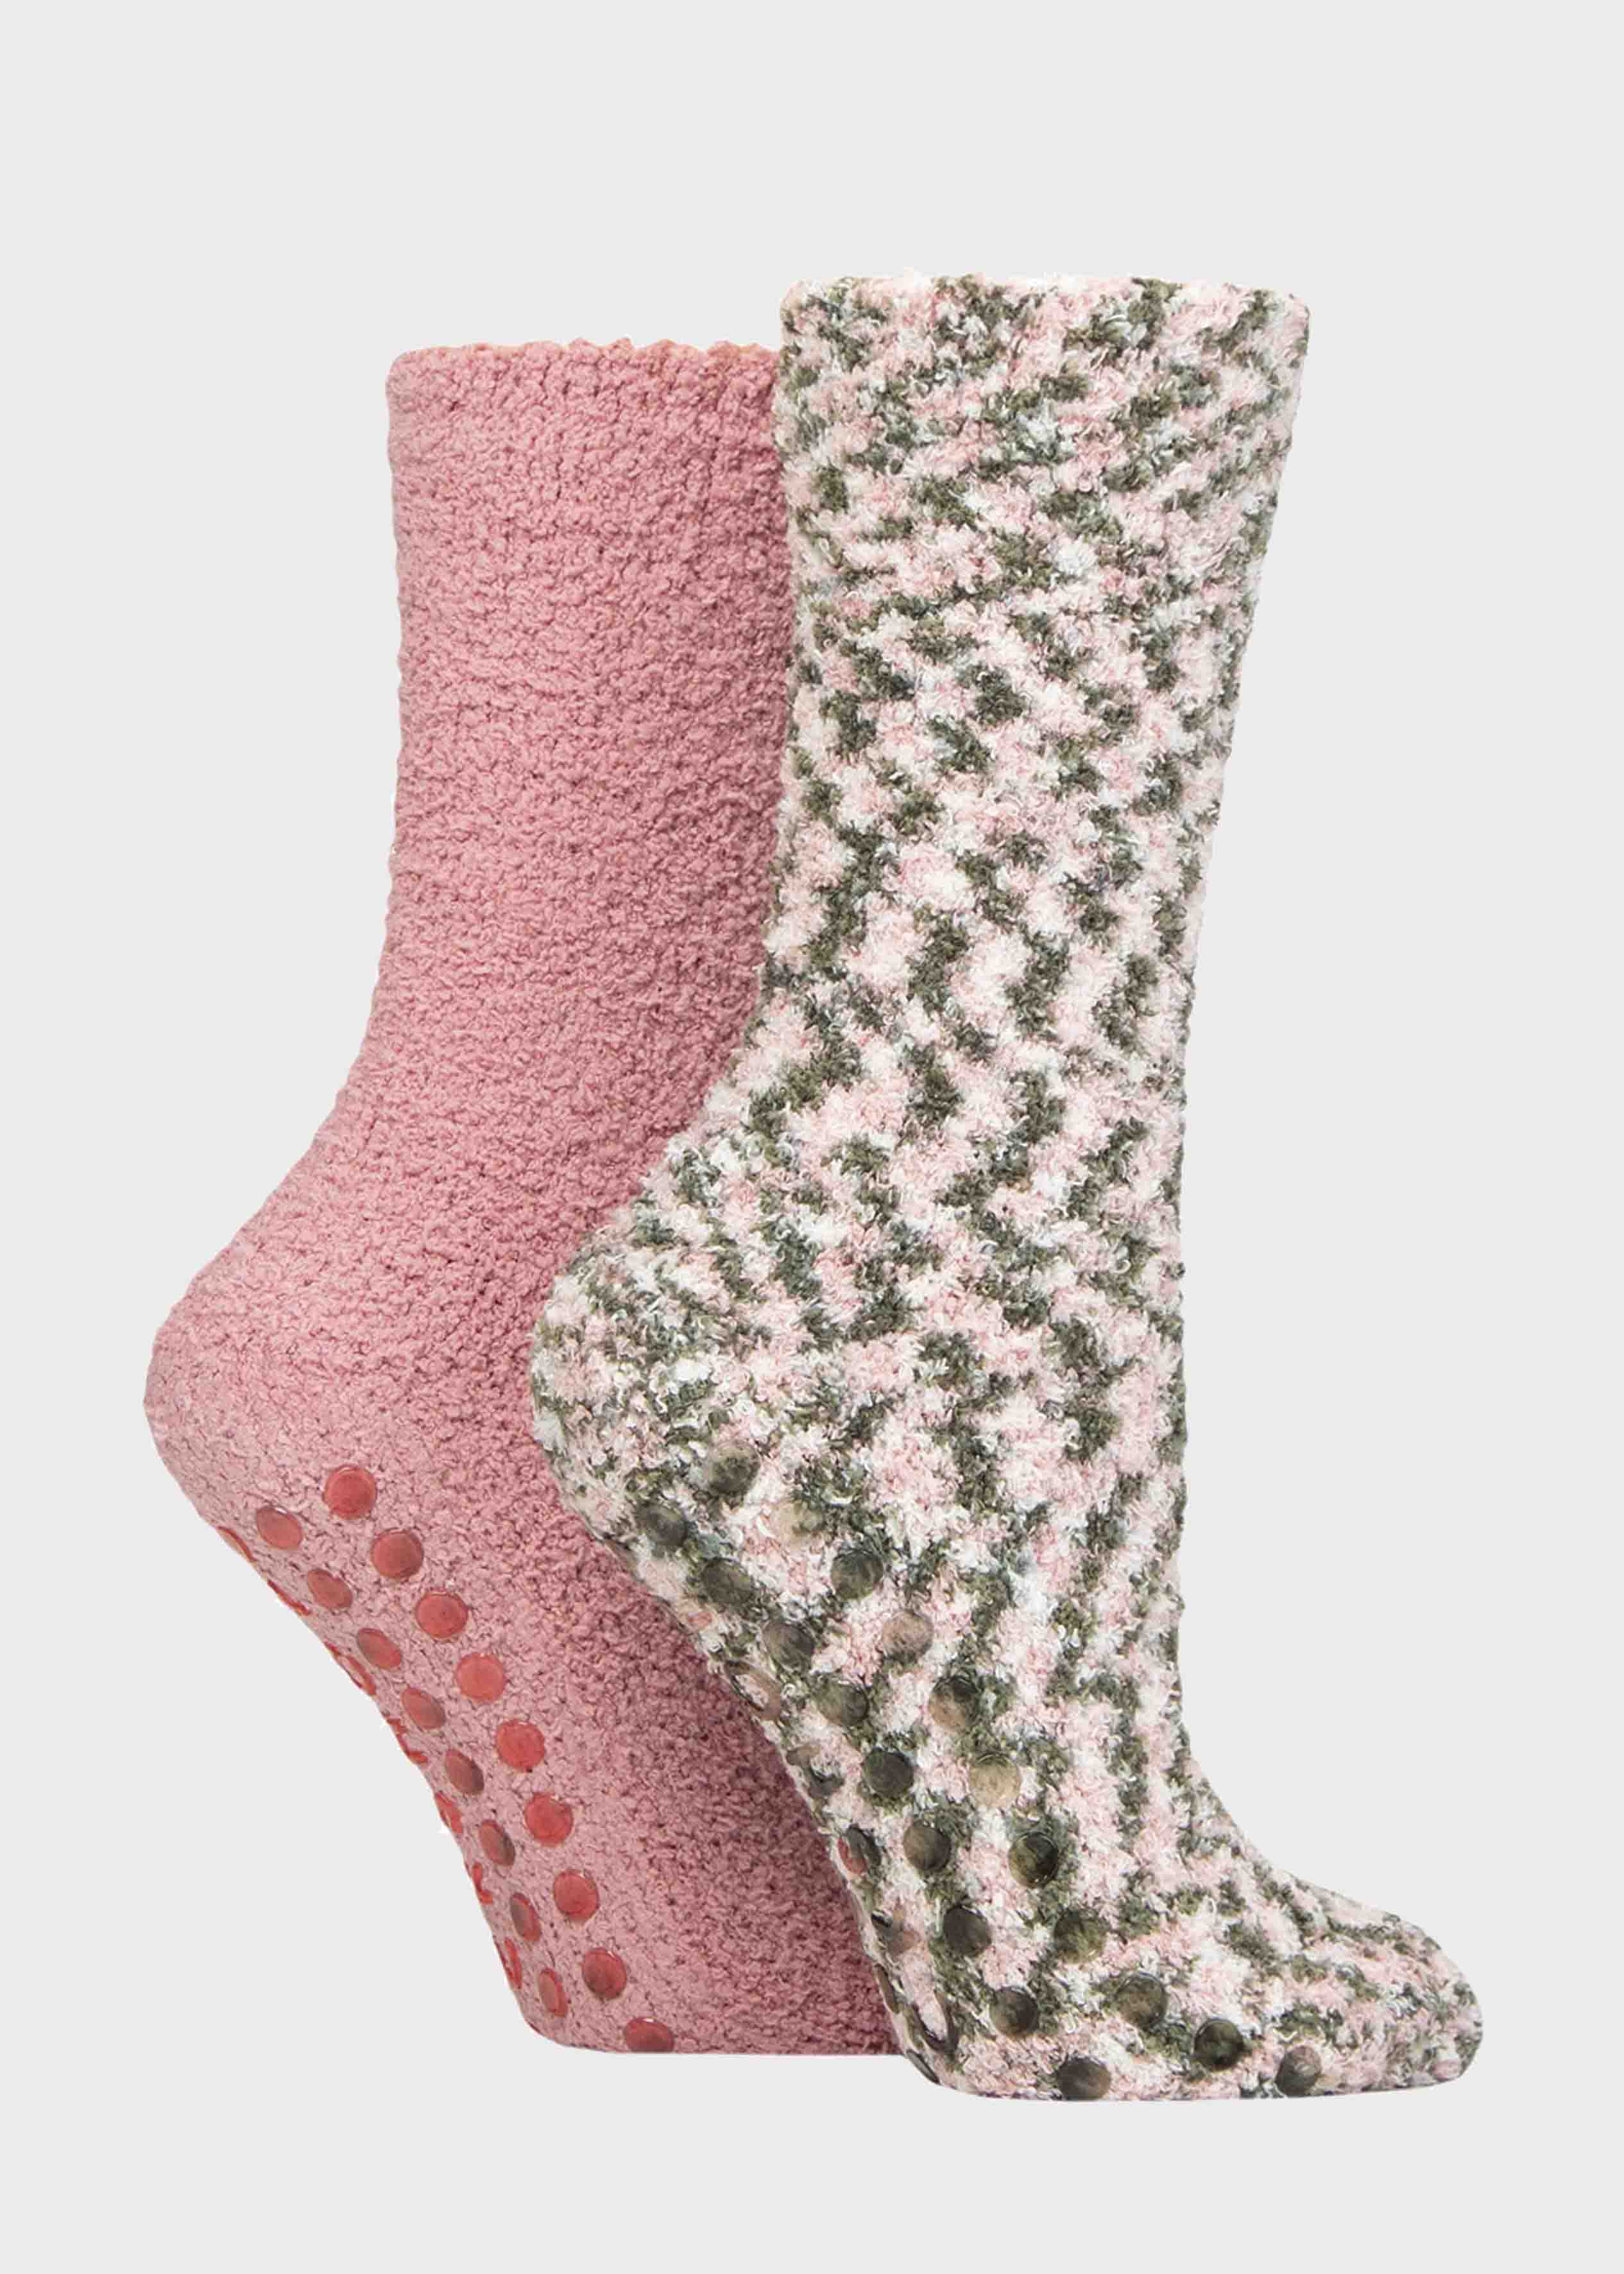 Crochet Slipper Socks Pattern - KnitcroAddict